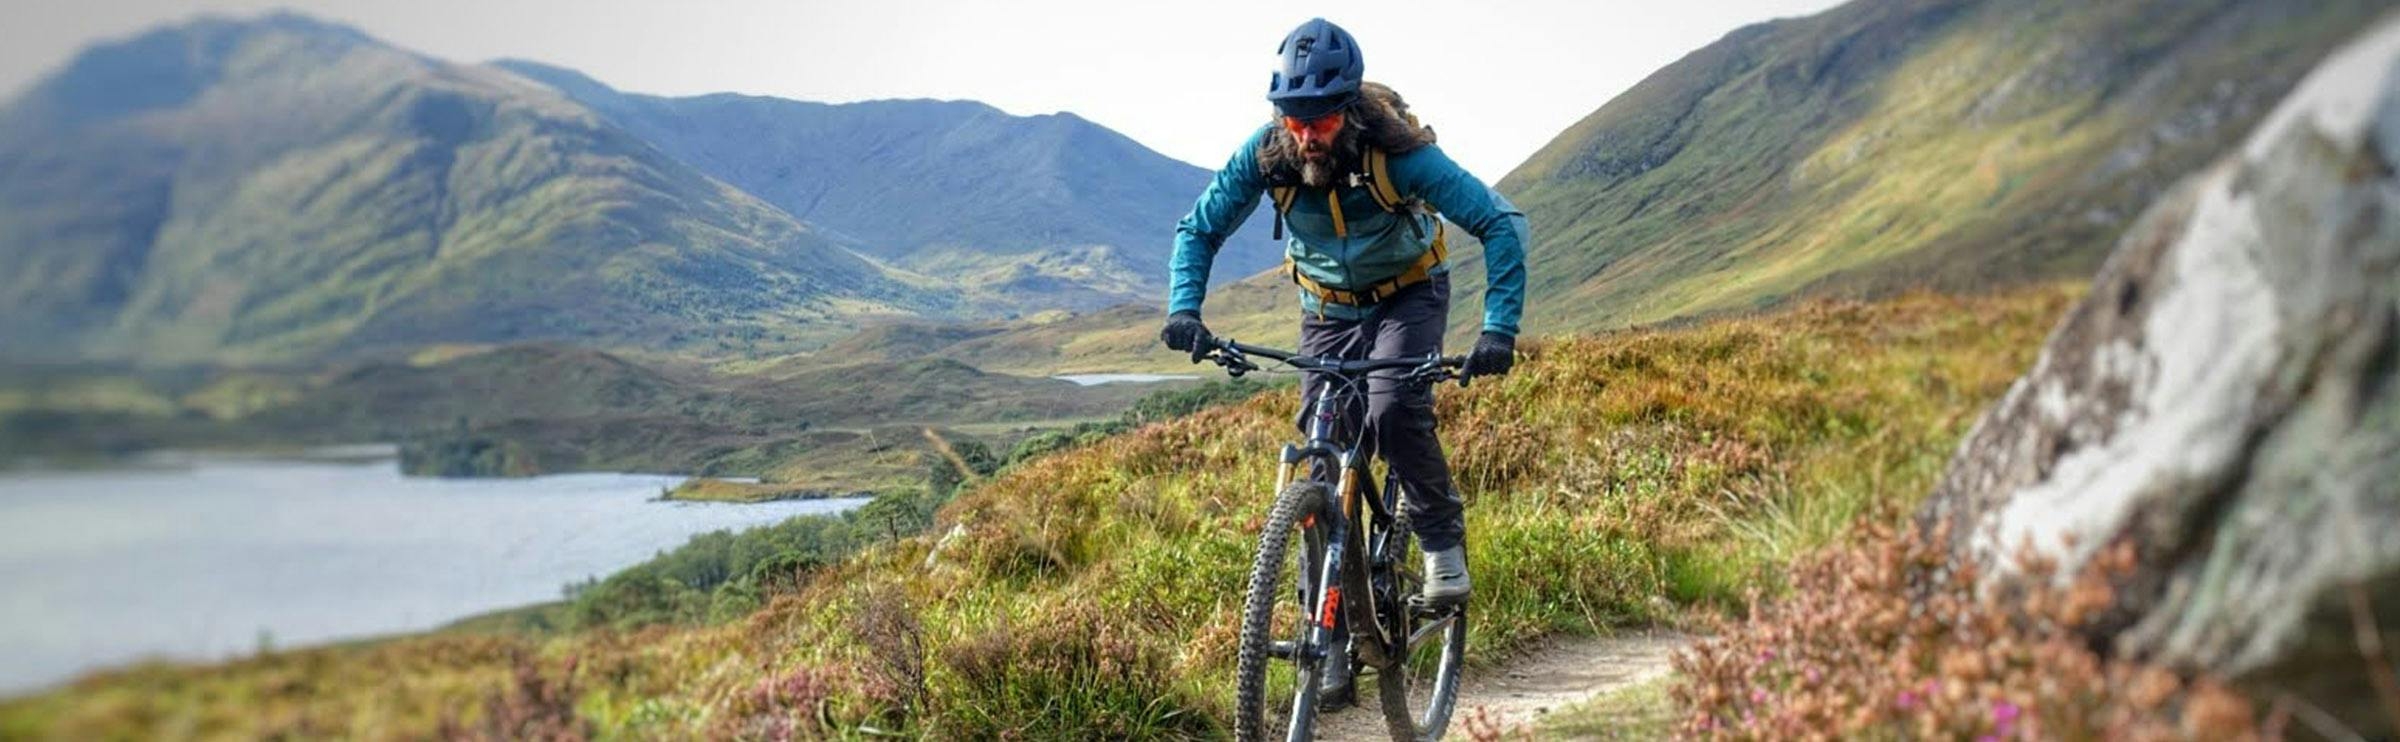 Andy McKenna riding his mountain bike in Scotland